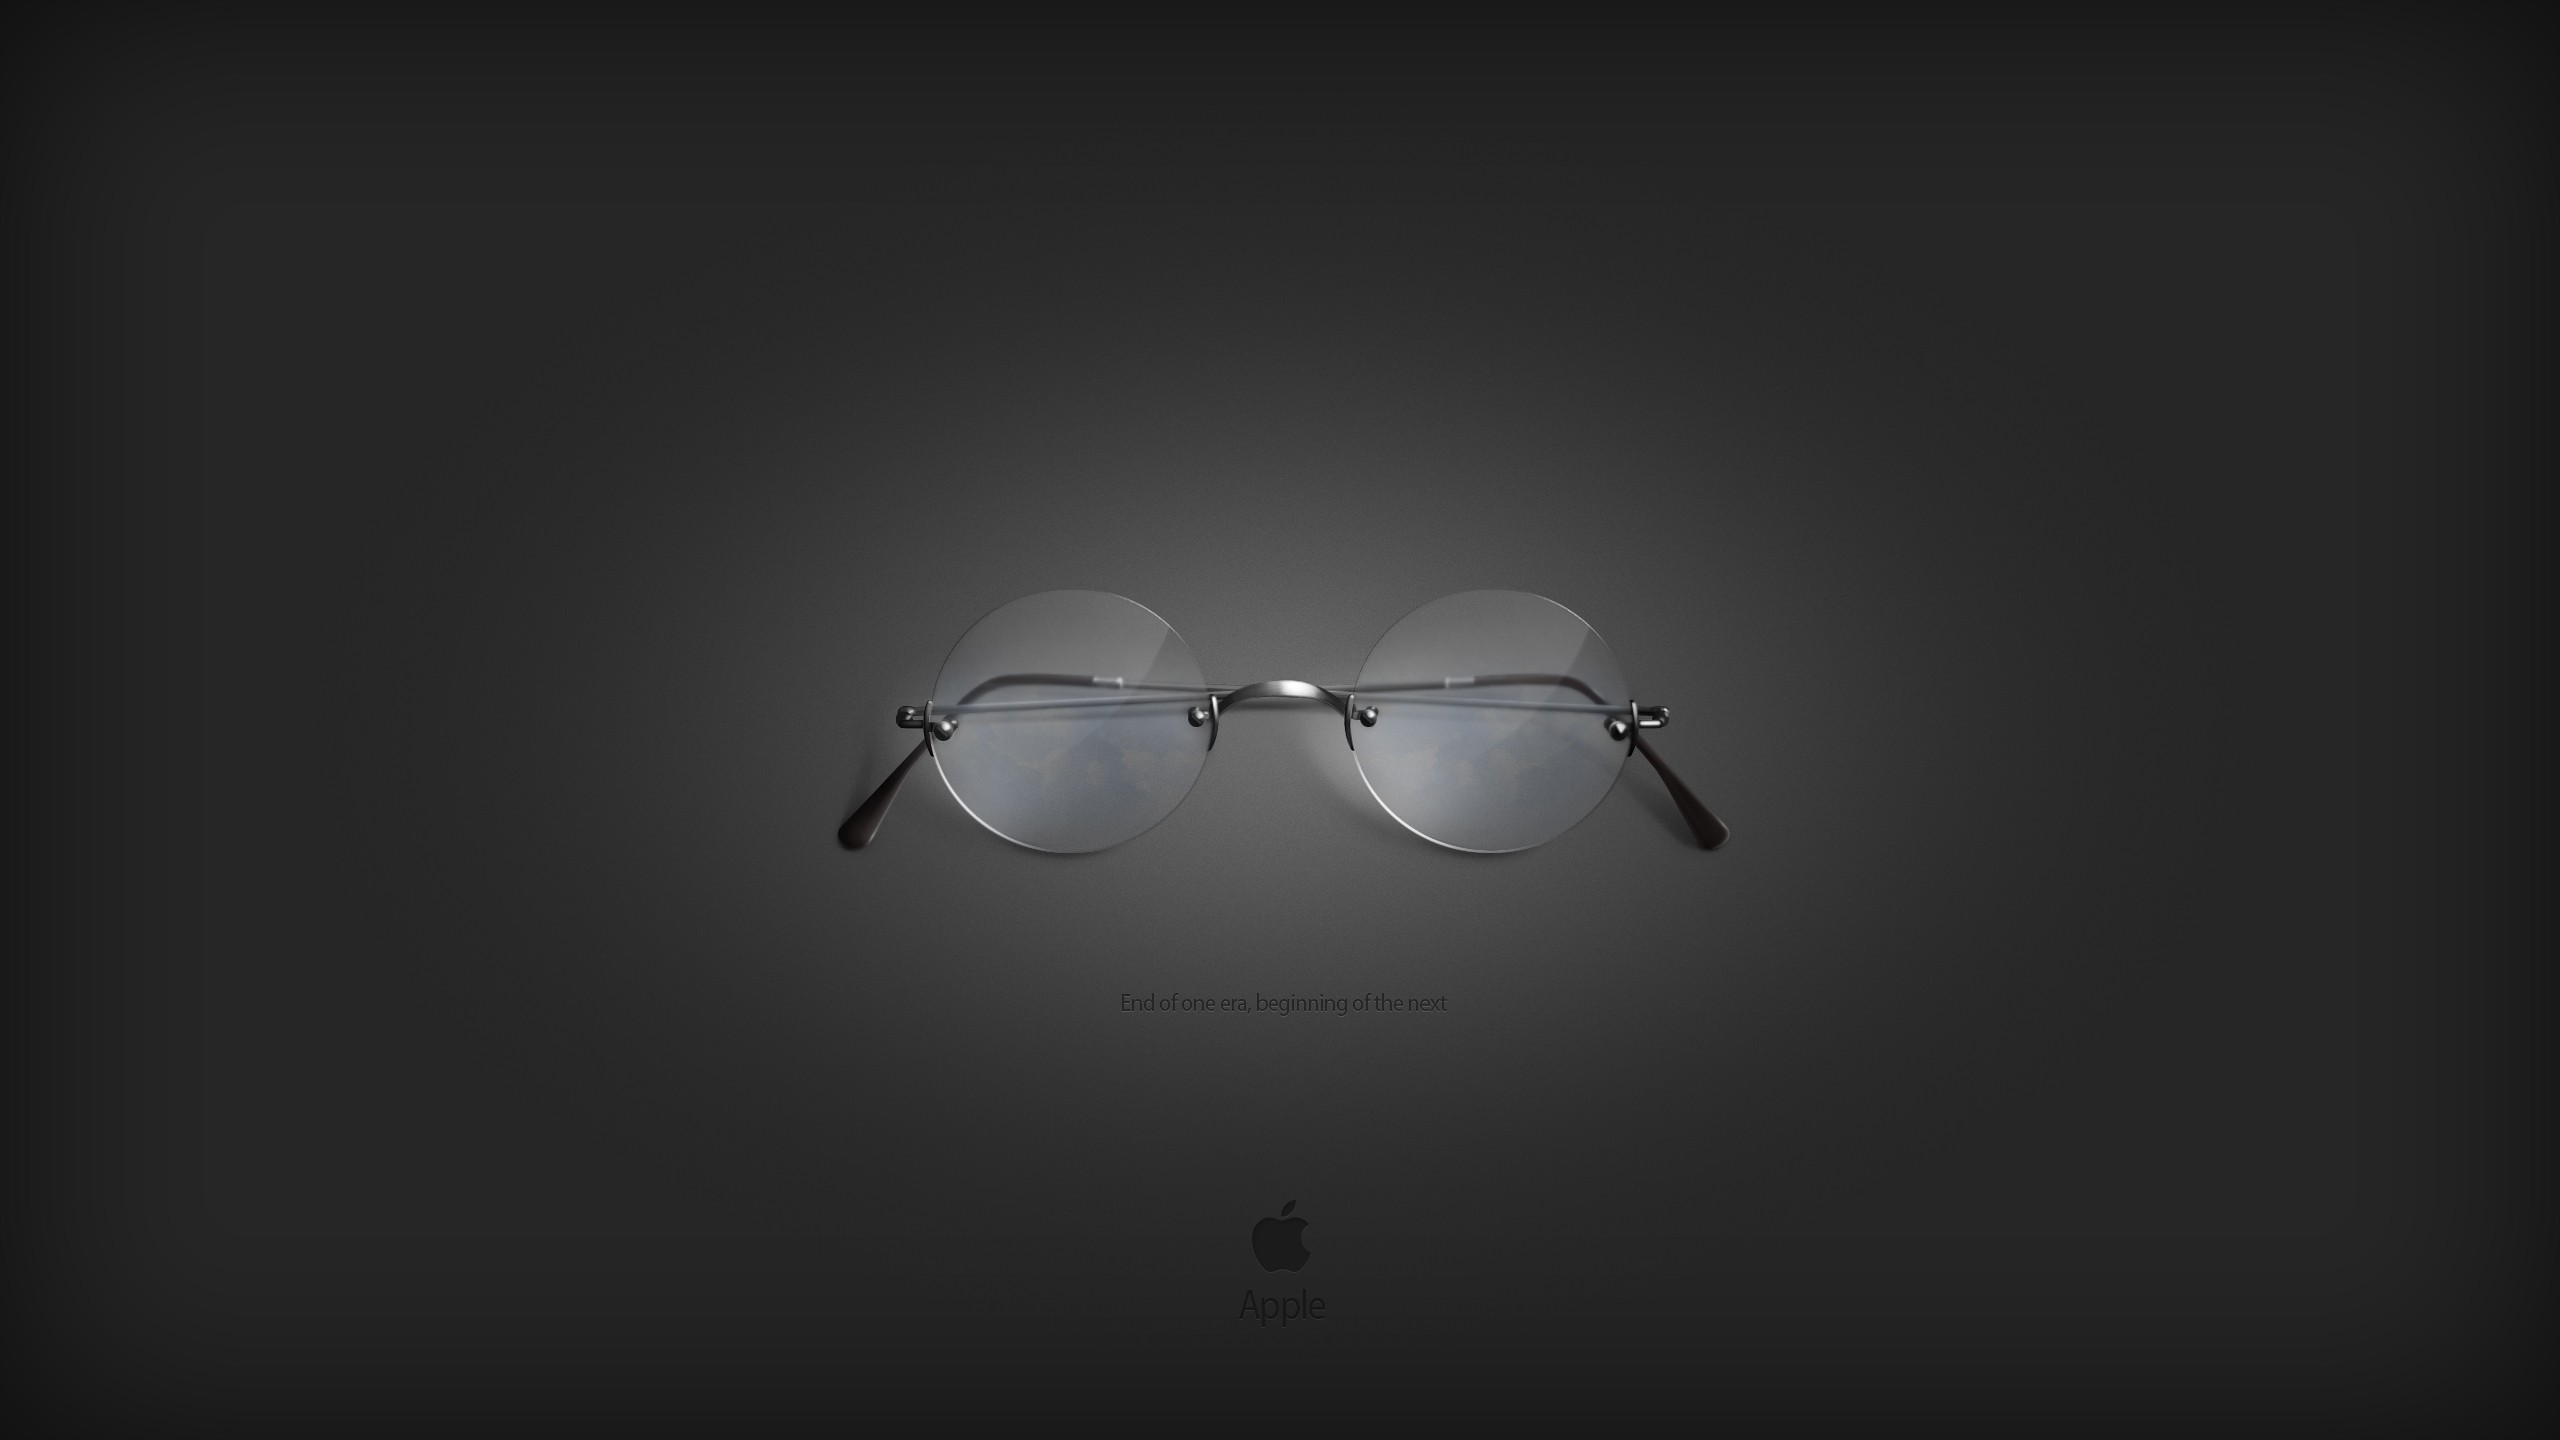 General 2560x1440 Steve Jobs goggles gray apples minimalism Apple Inc. gray background simple background text digital art logo